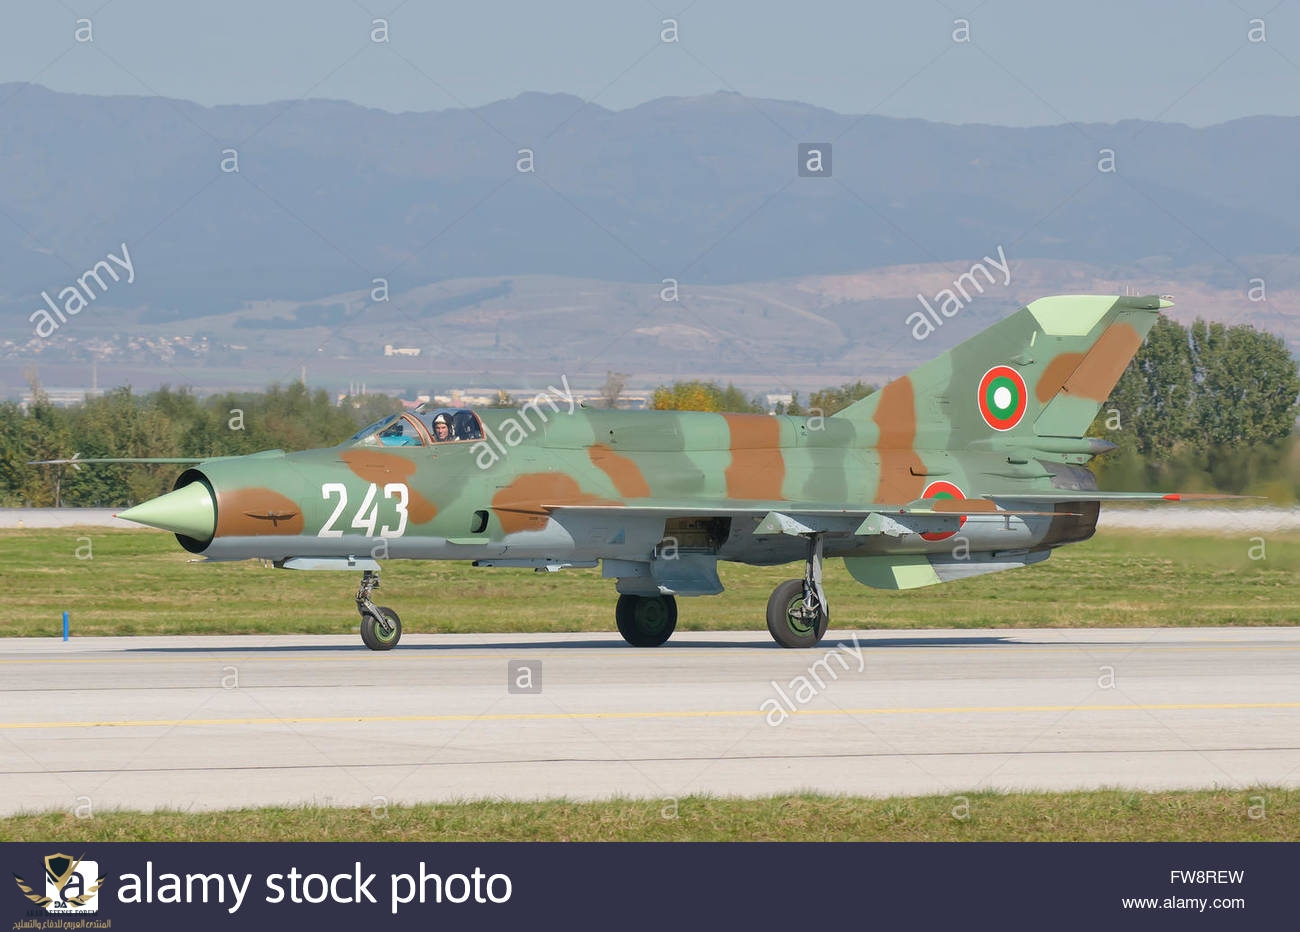 a-bulgarian-air-force-mig-21-bulgaria-FW8REW.jpg